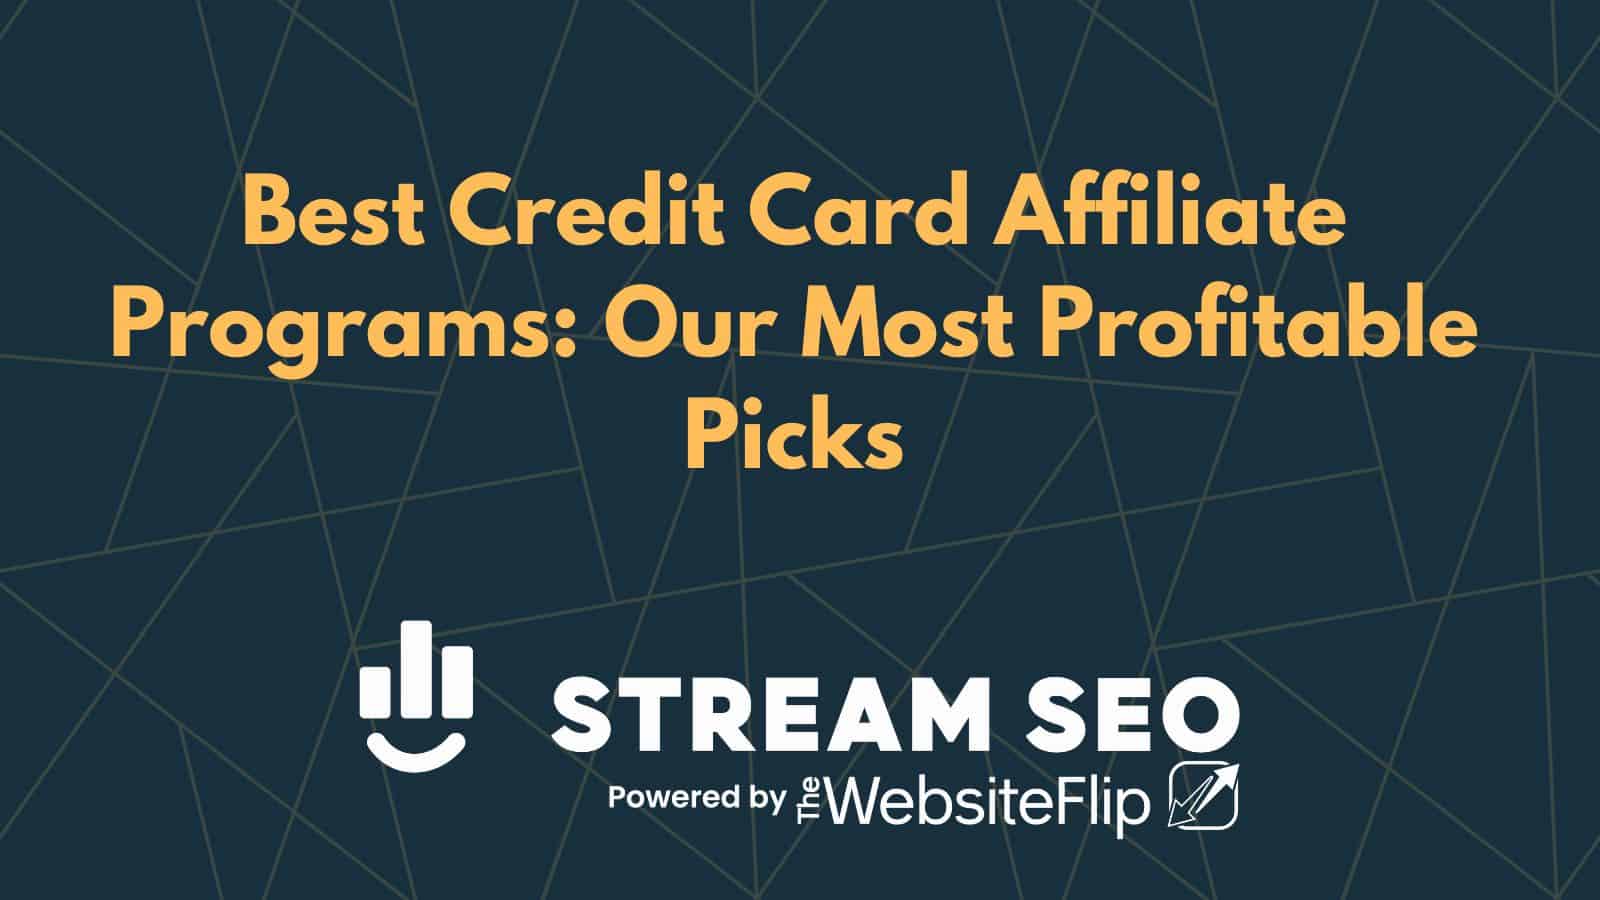 11 Best Credit Card Affiliate Programs: Our Most Profitable Picks